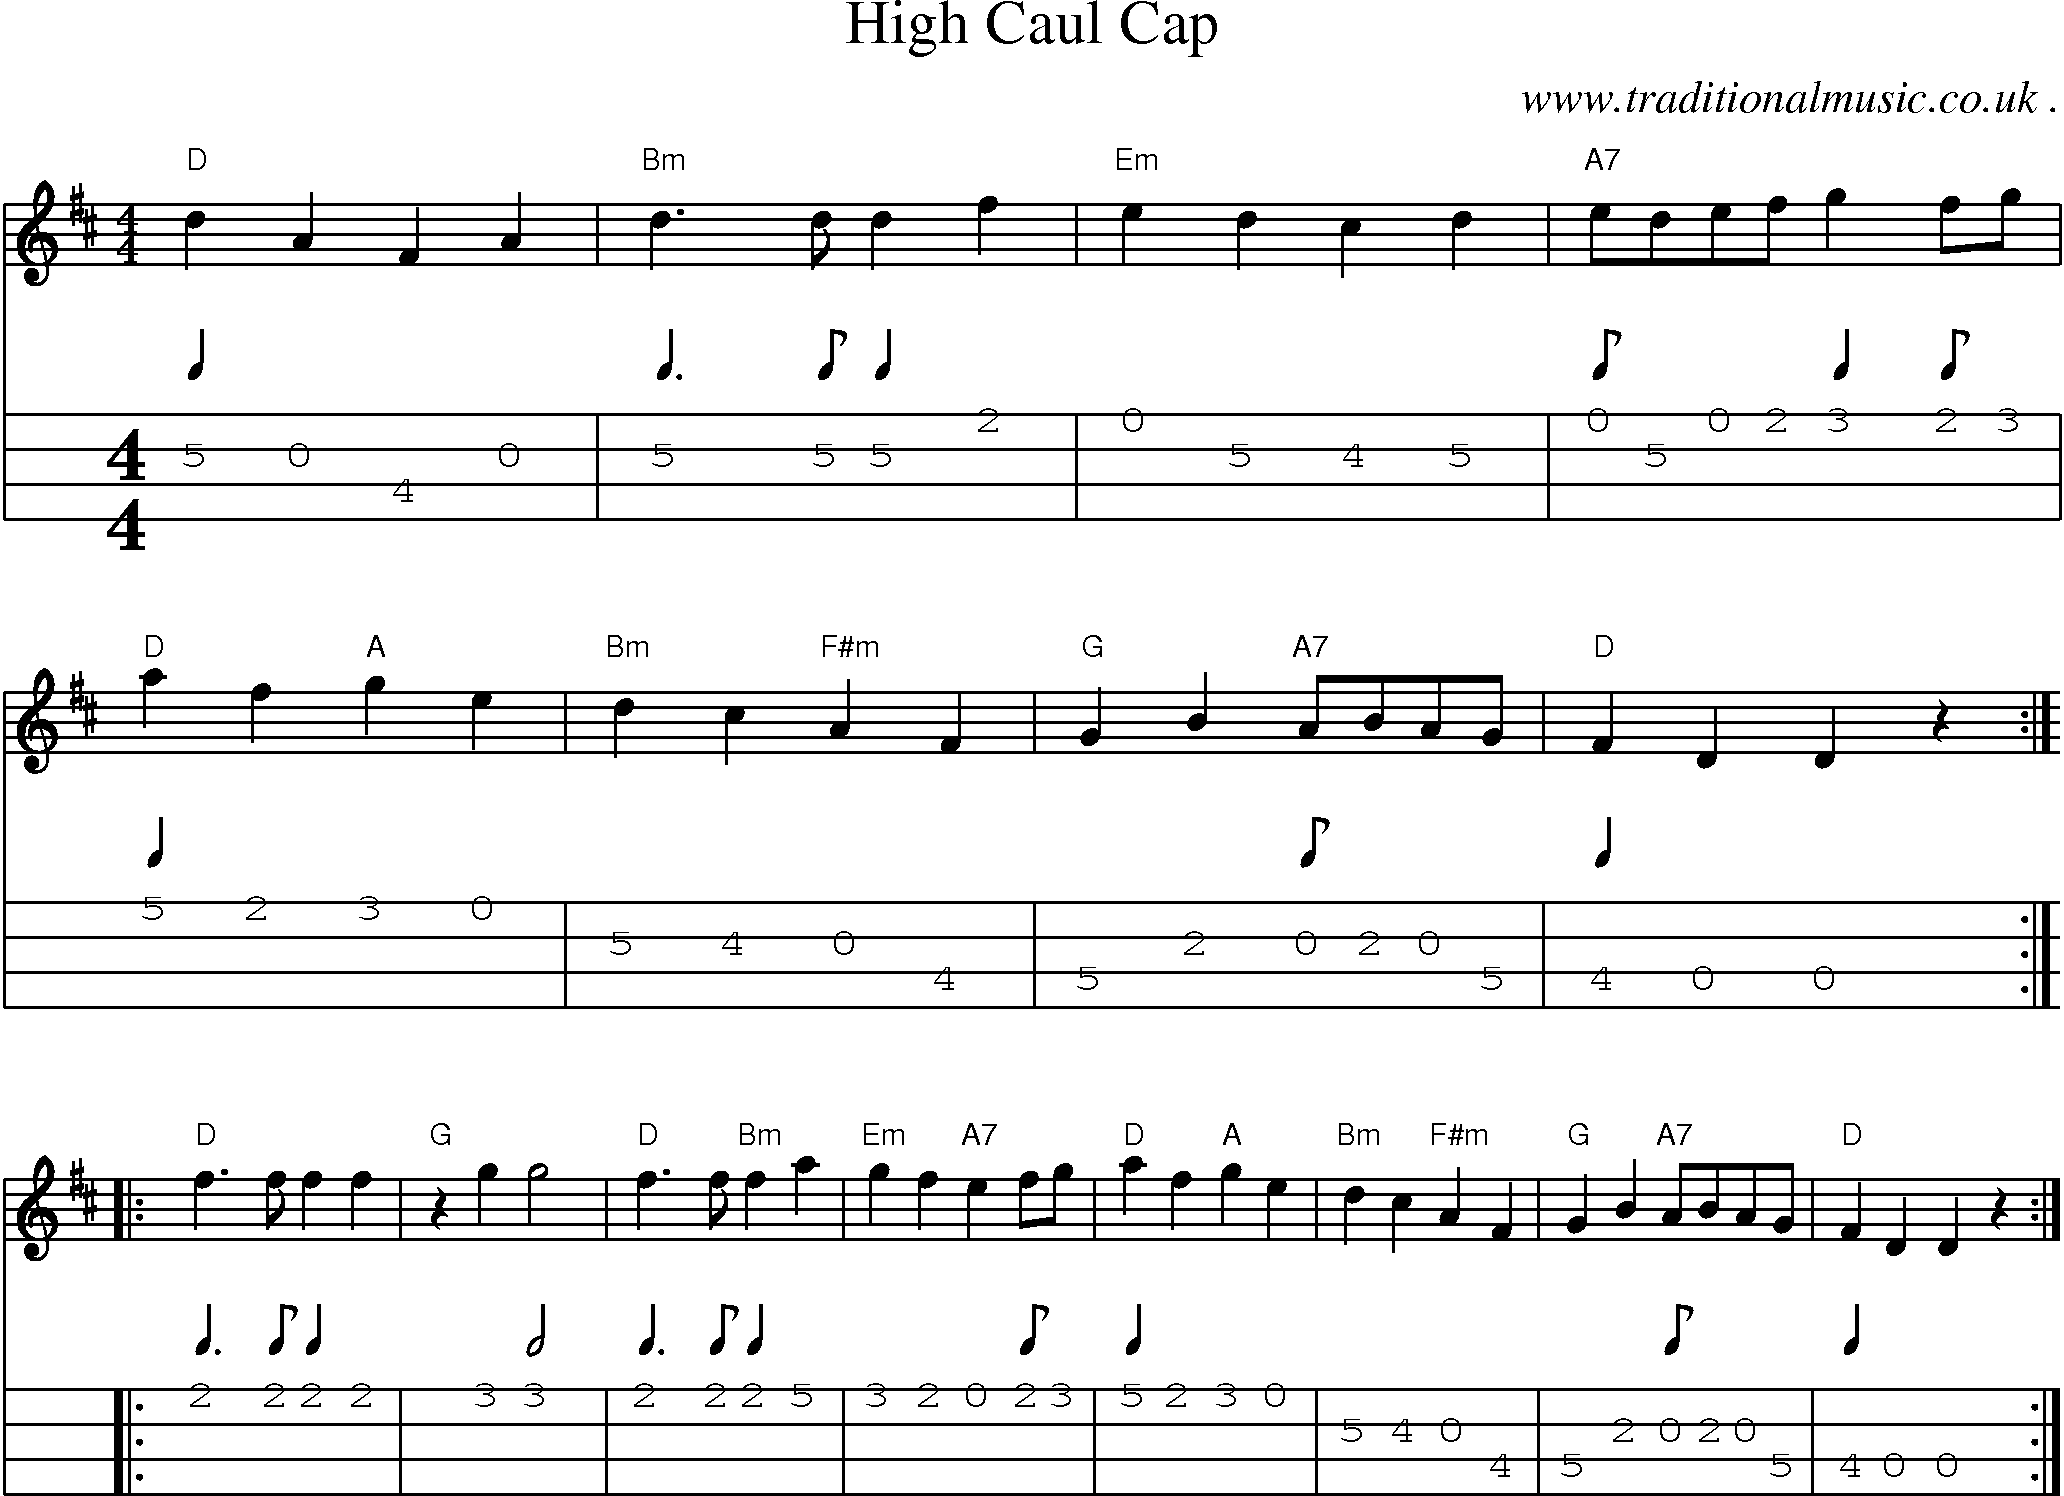 Sheet-Music and Mandolin Tabs for High Caul Cap